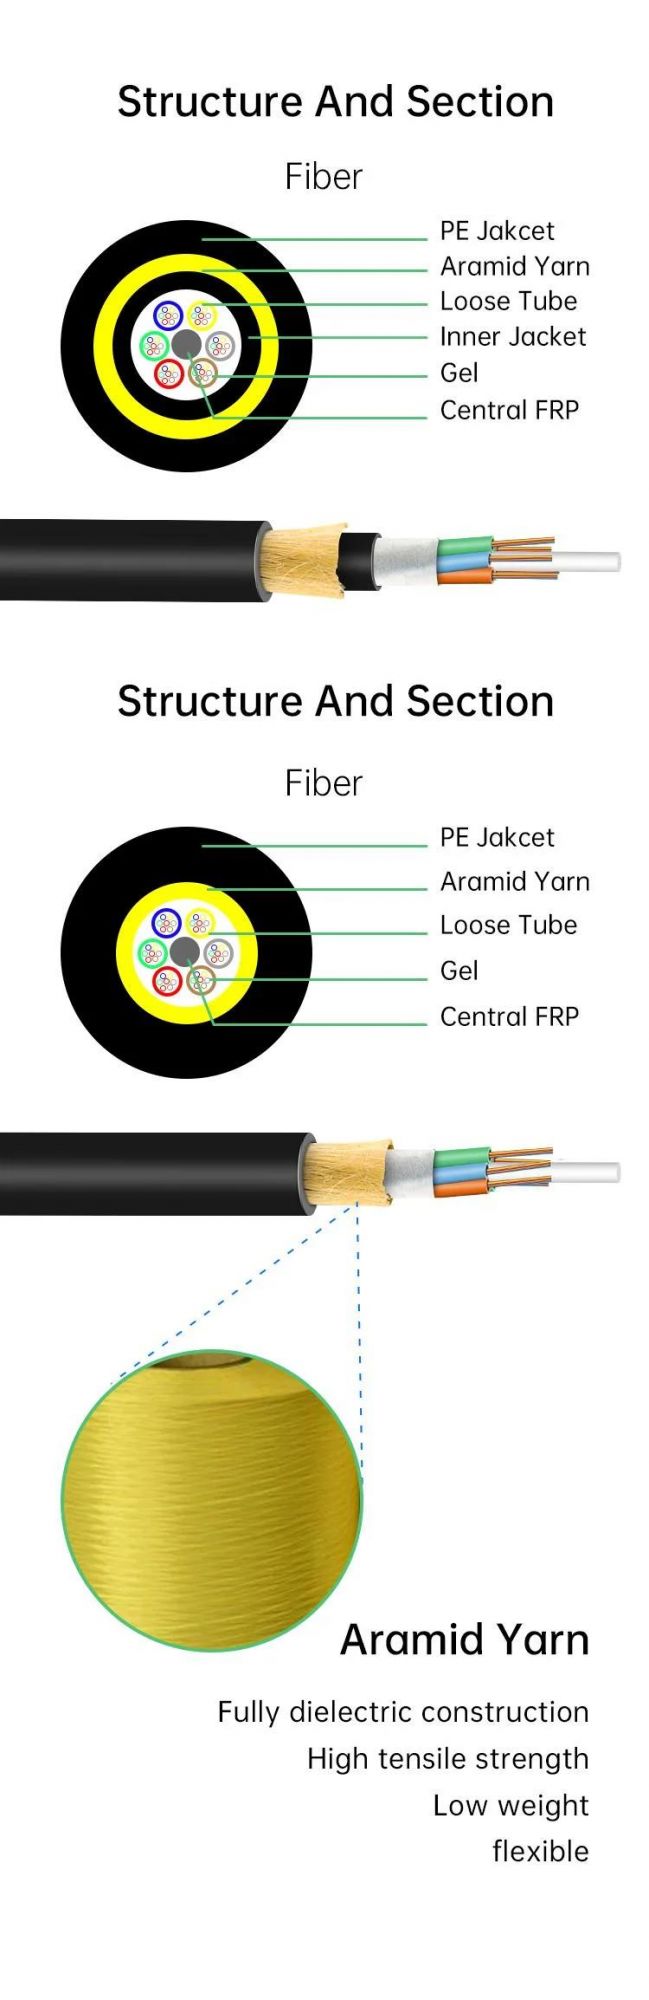 OEM Wood Drum Aramid Yarn ADSS Fiber Optic Cable G652D with PE Jacket